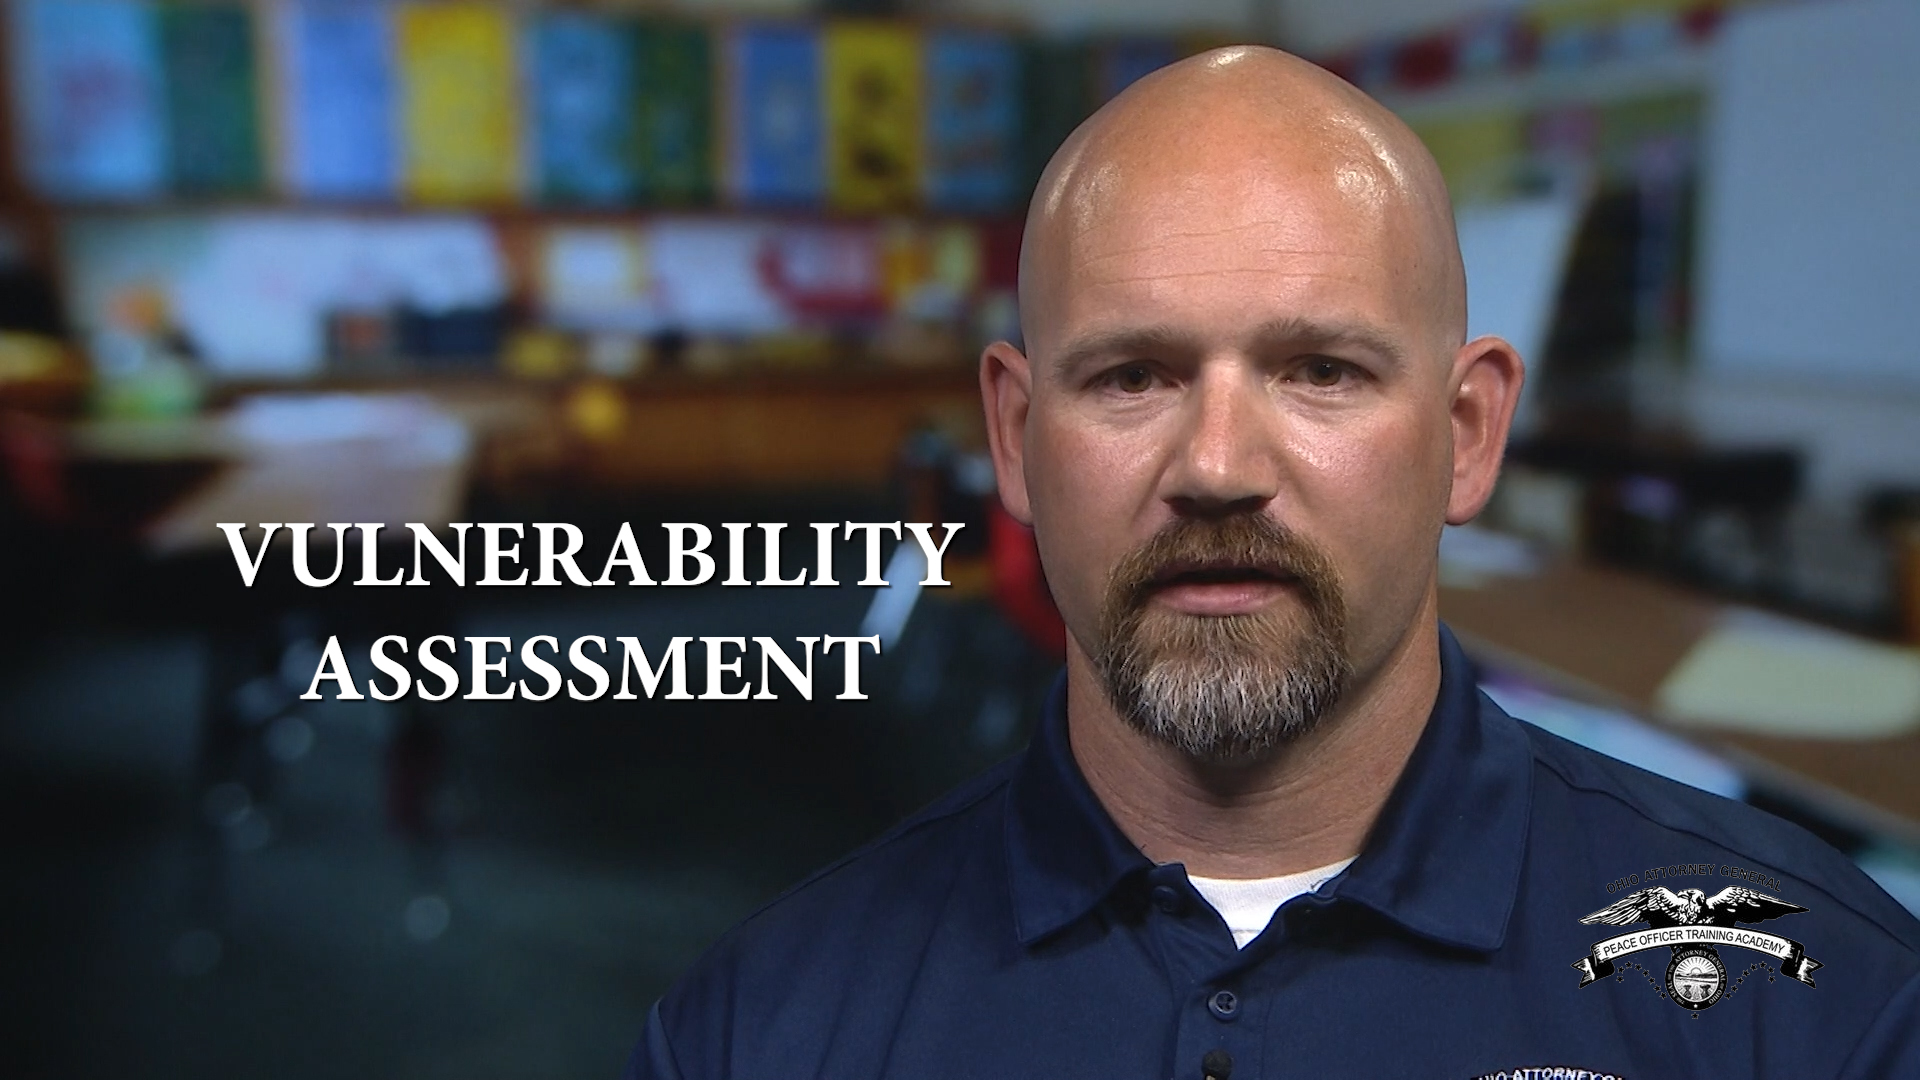 Video 23: Vulnerability Assessment